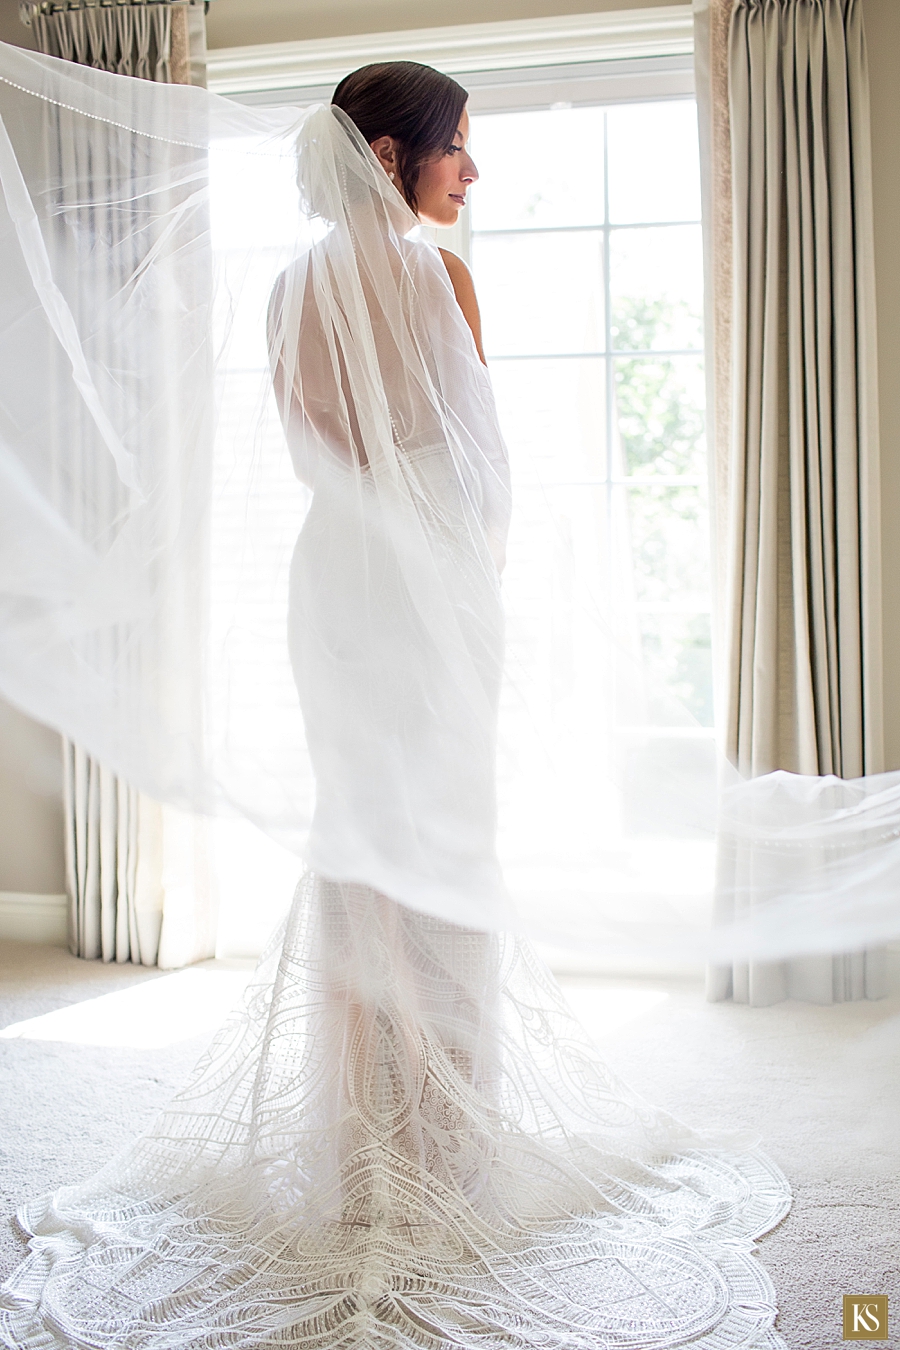 Gorgeous veil photograph